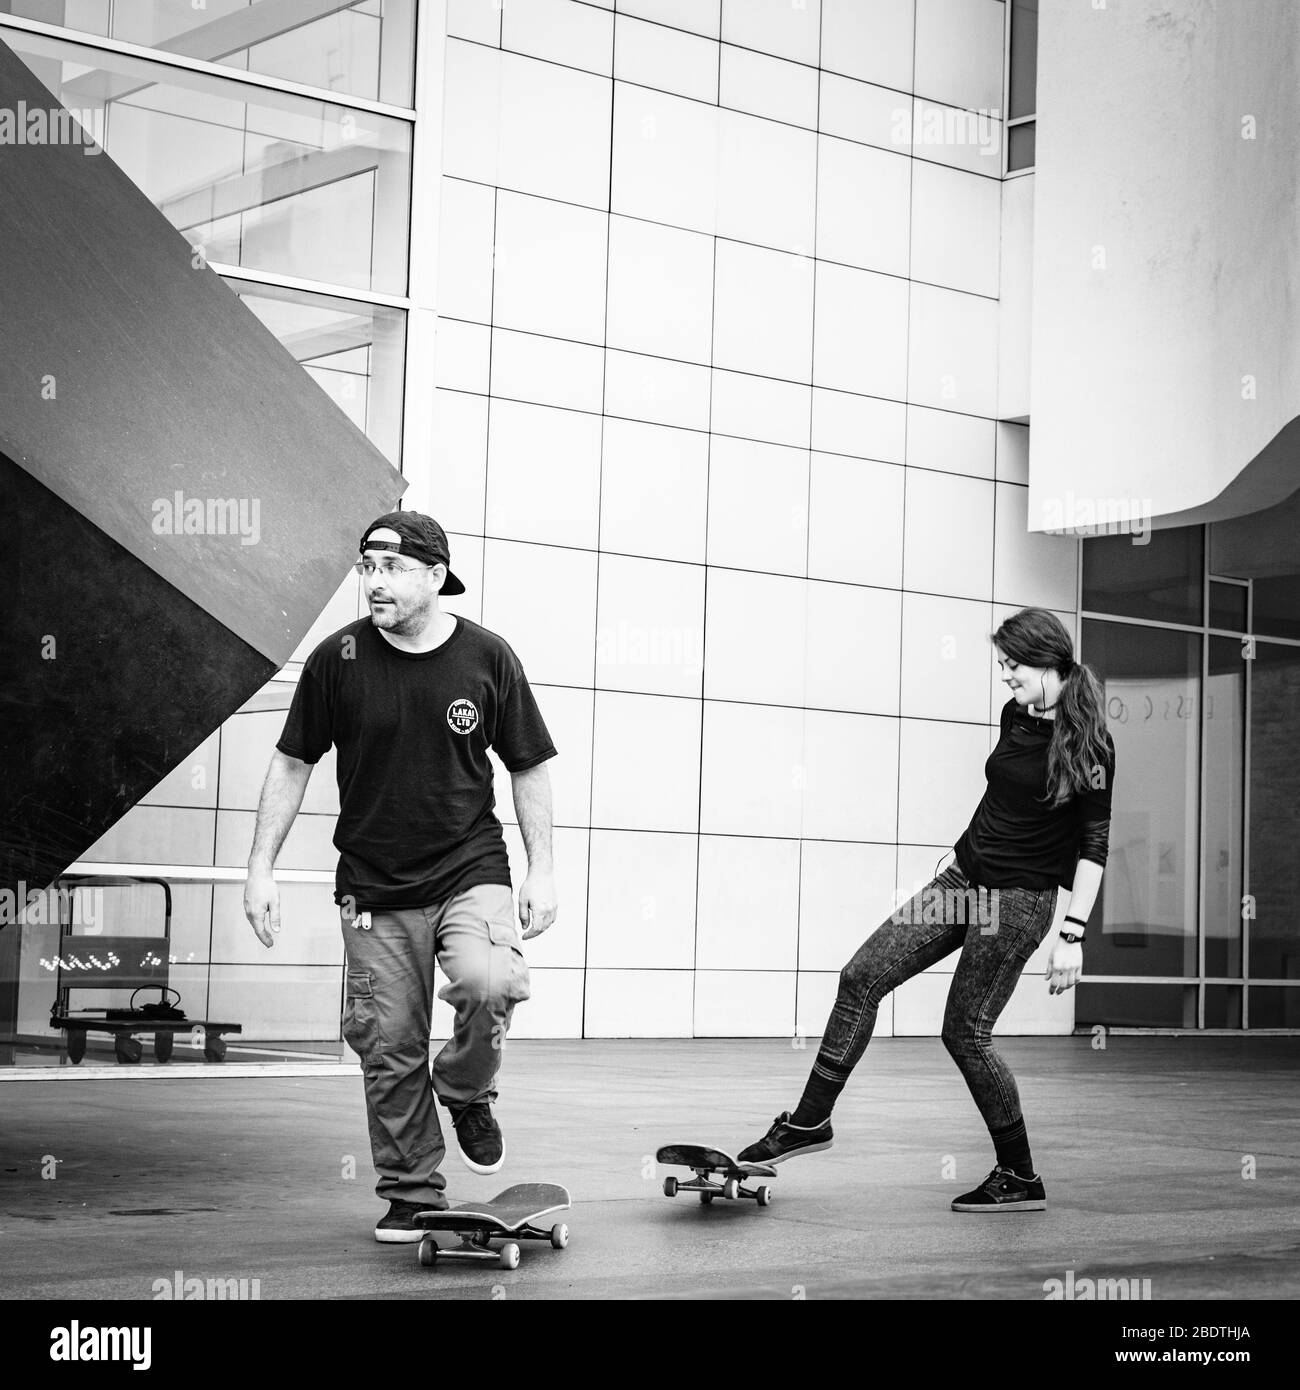 Skateboarders outside the Museu d'Art Contemporani de Barcelona (MACBA). Stock Photo